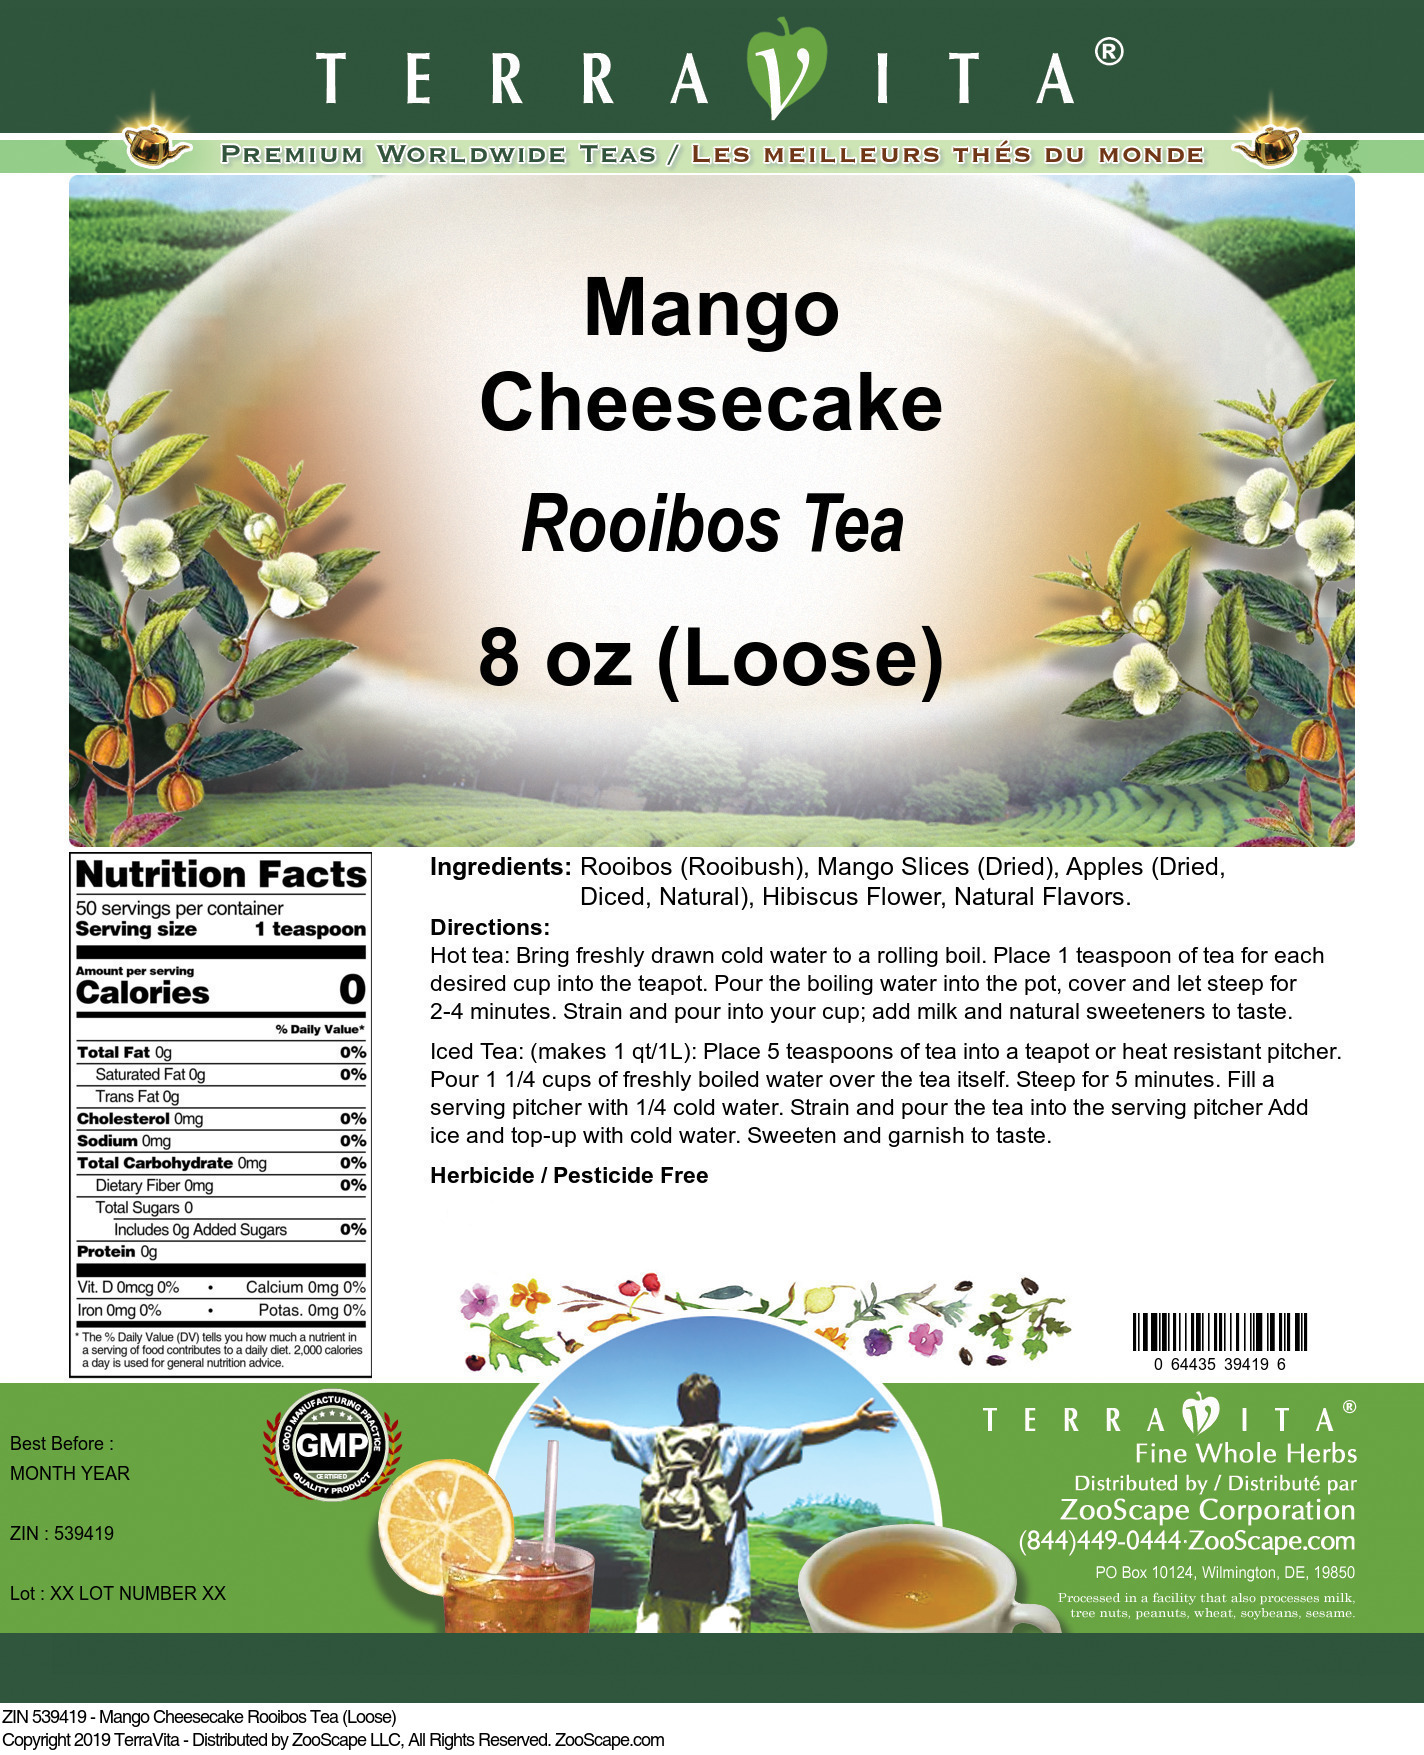 Mango Cheesecake Rooibos Tea (Loose) - Label